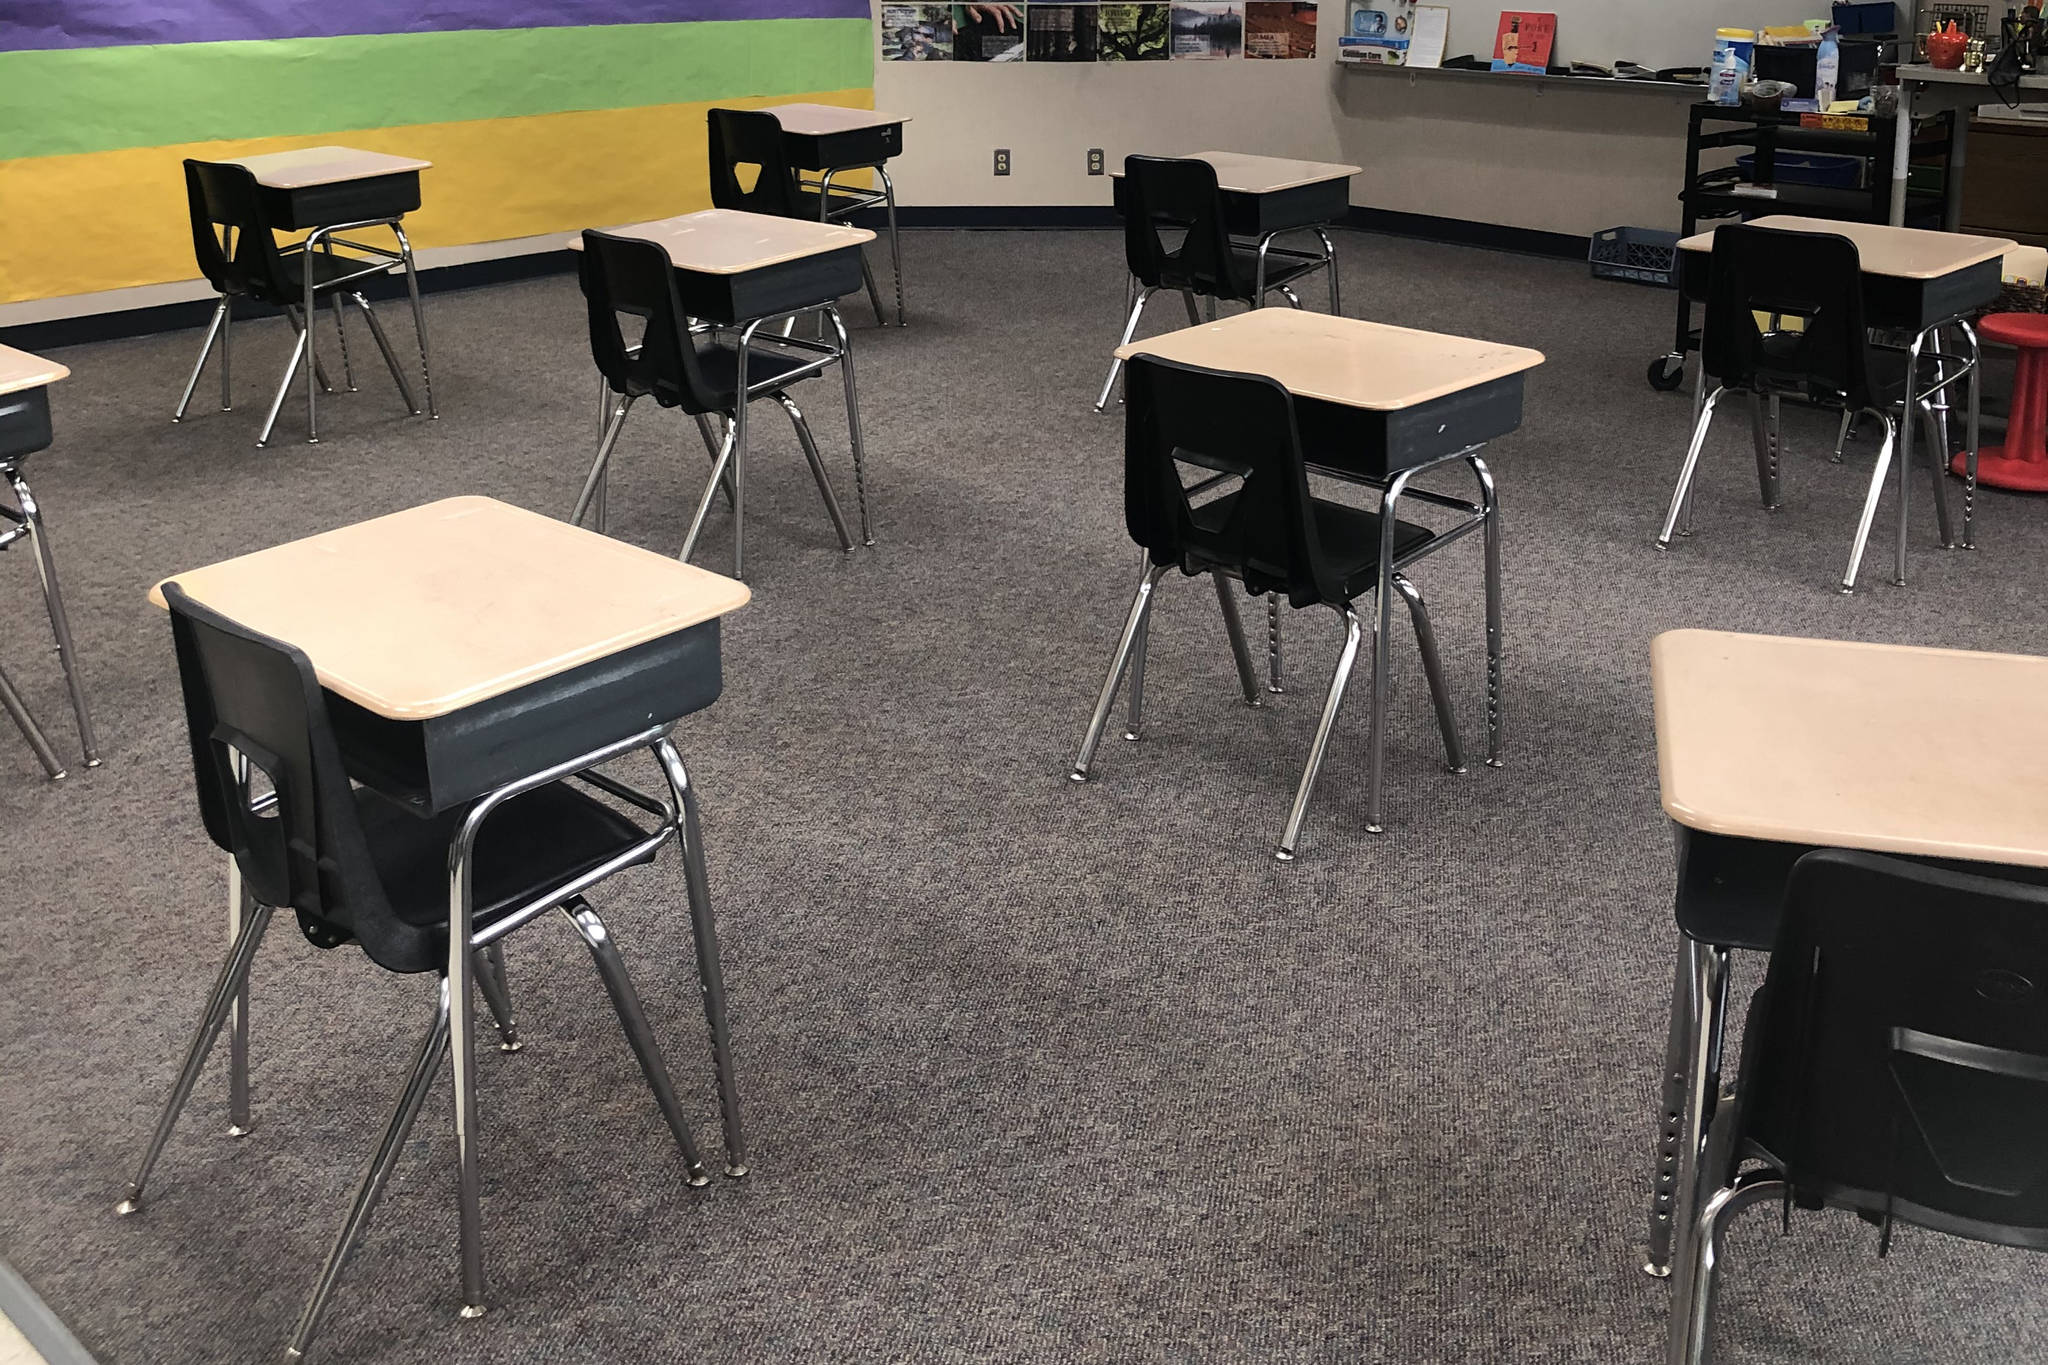 Empty desks await students at Friday Harbor Elementary School. (Emillie Novak/staff photo)